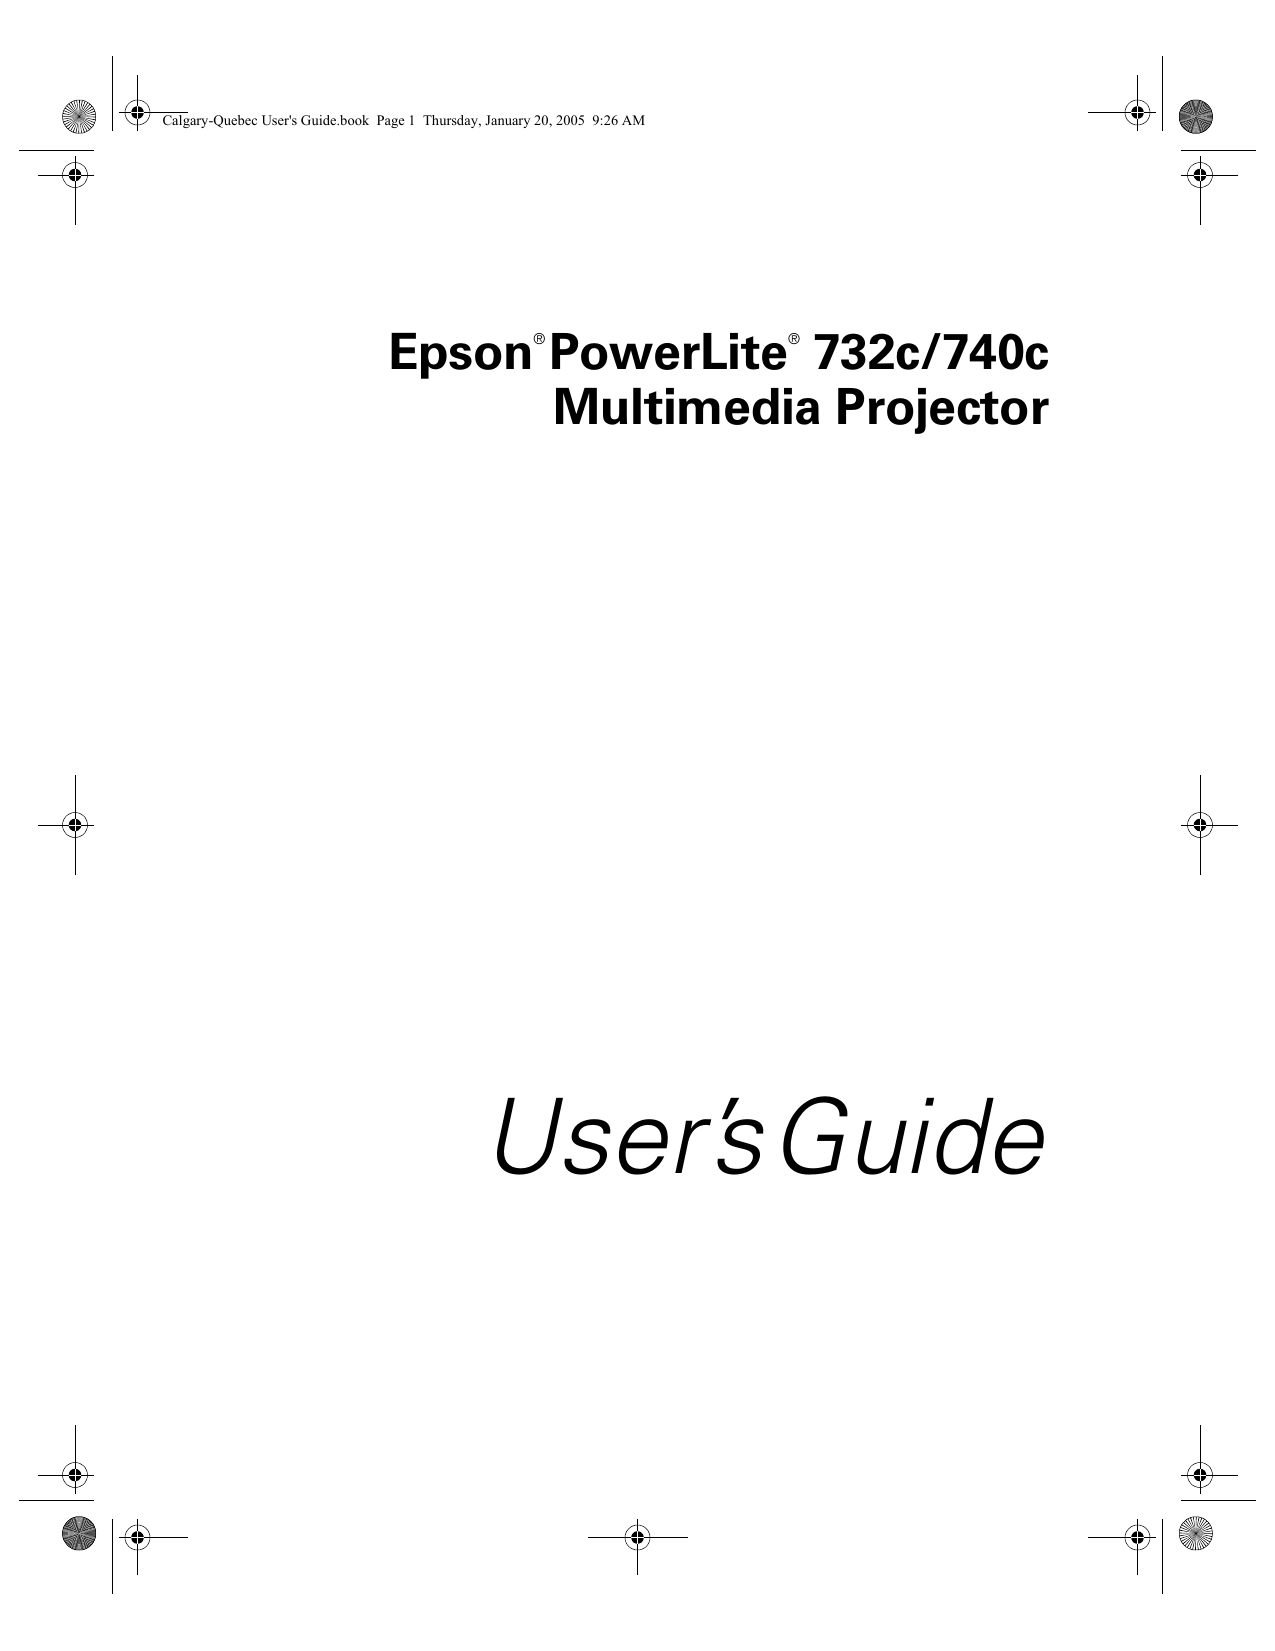 PowerLite 732c Projector User manual | Manualzz